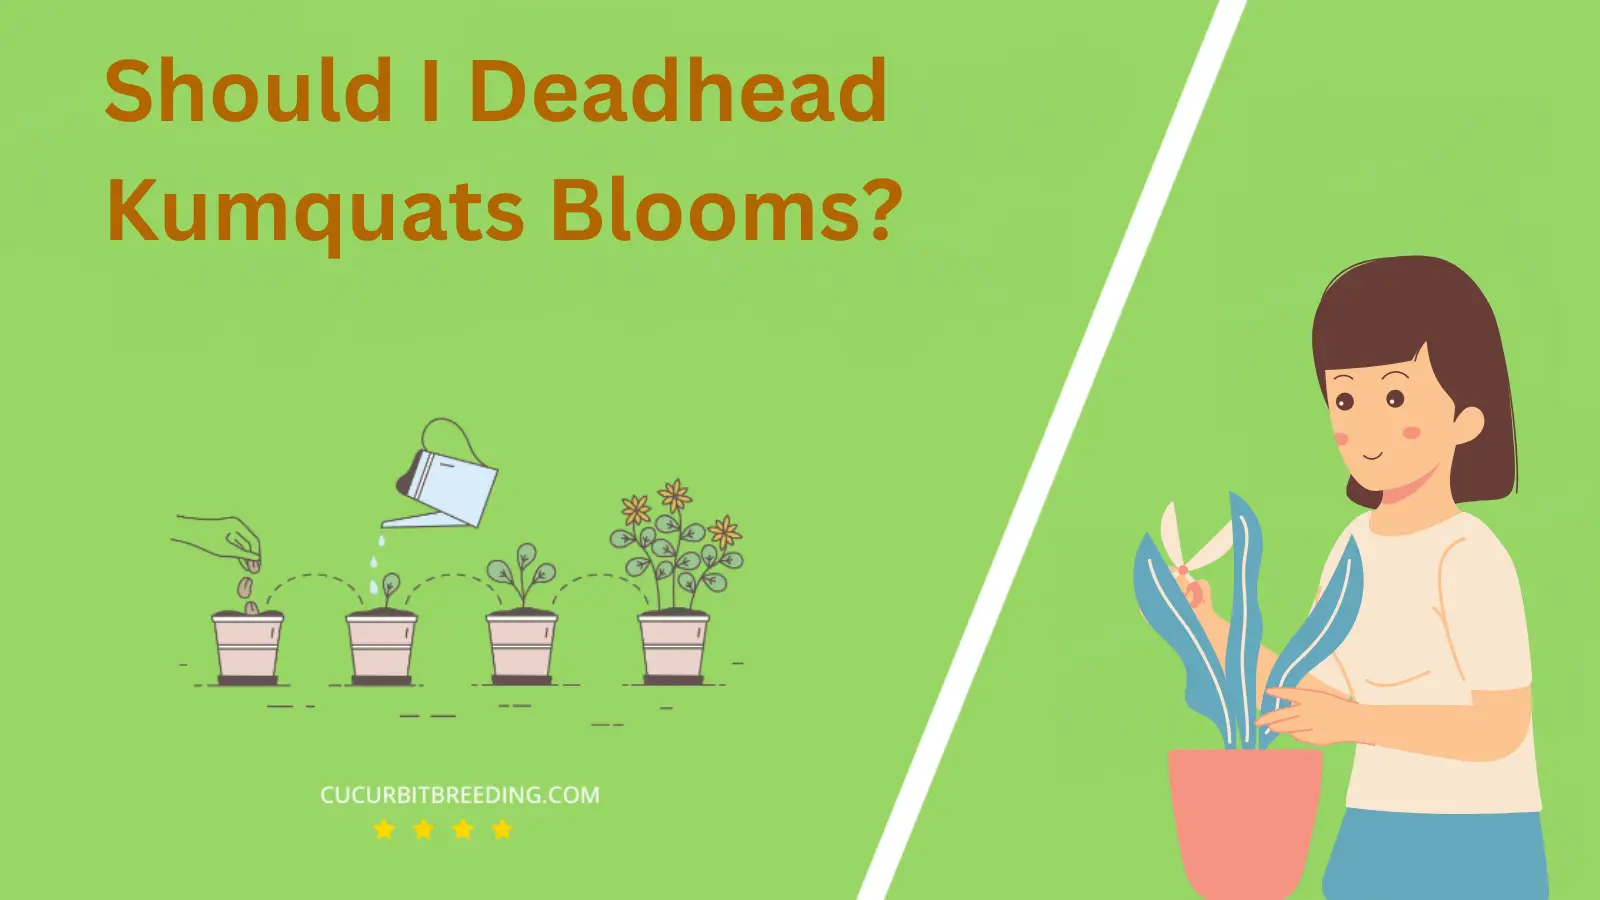 Should I Deadhead Kumquats Blooms?